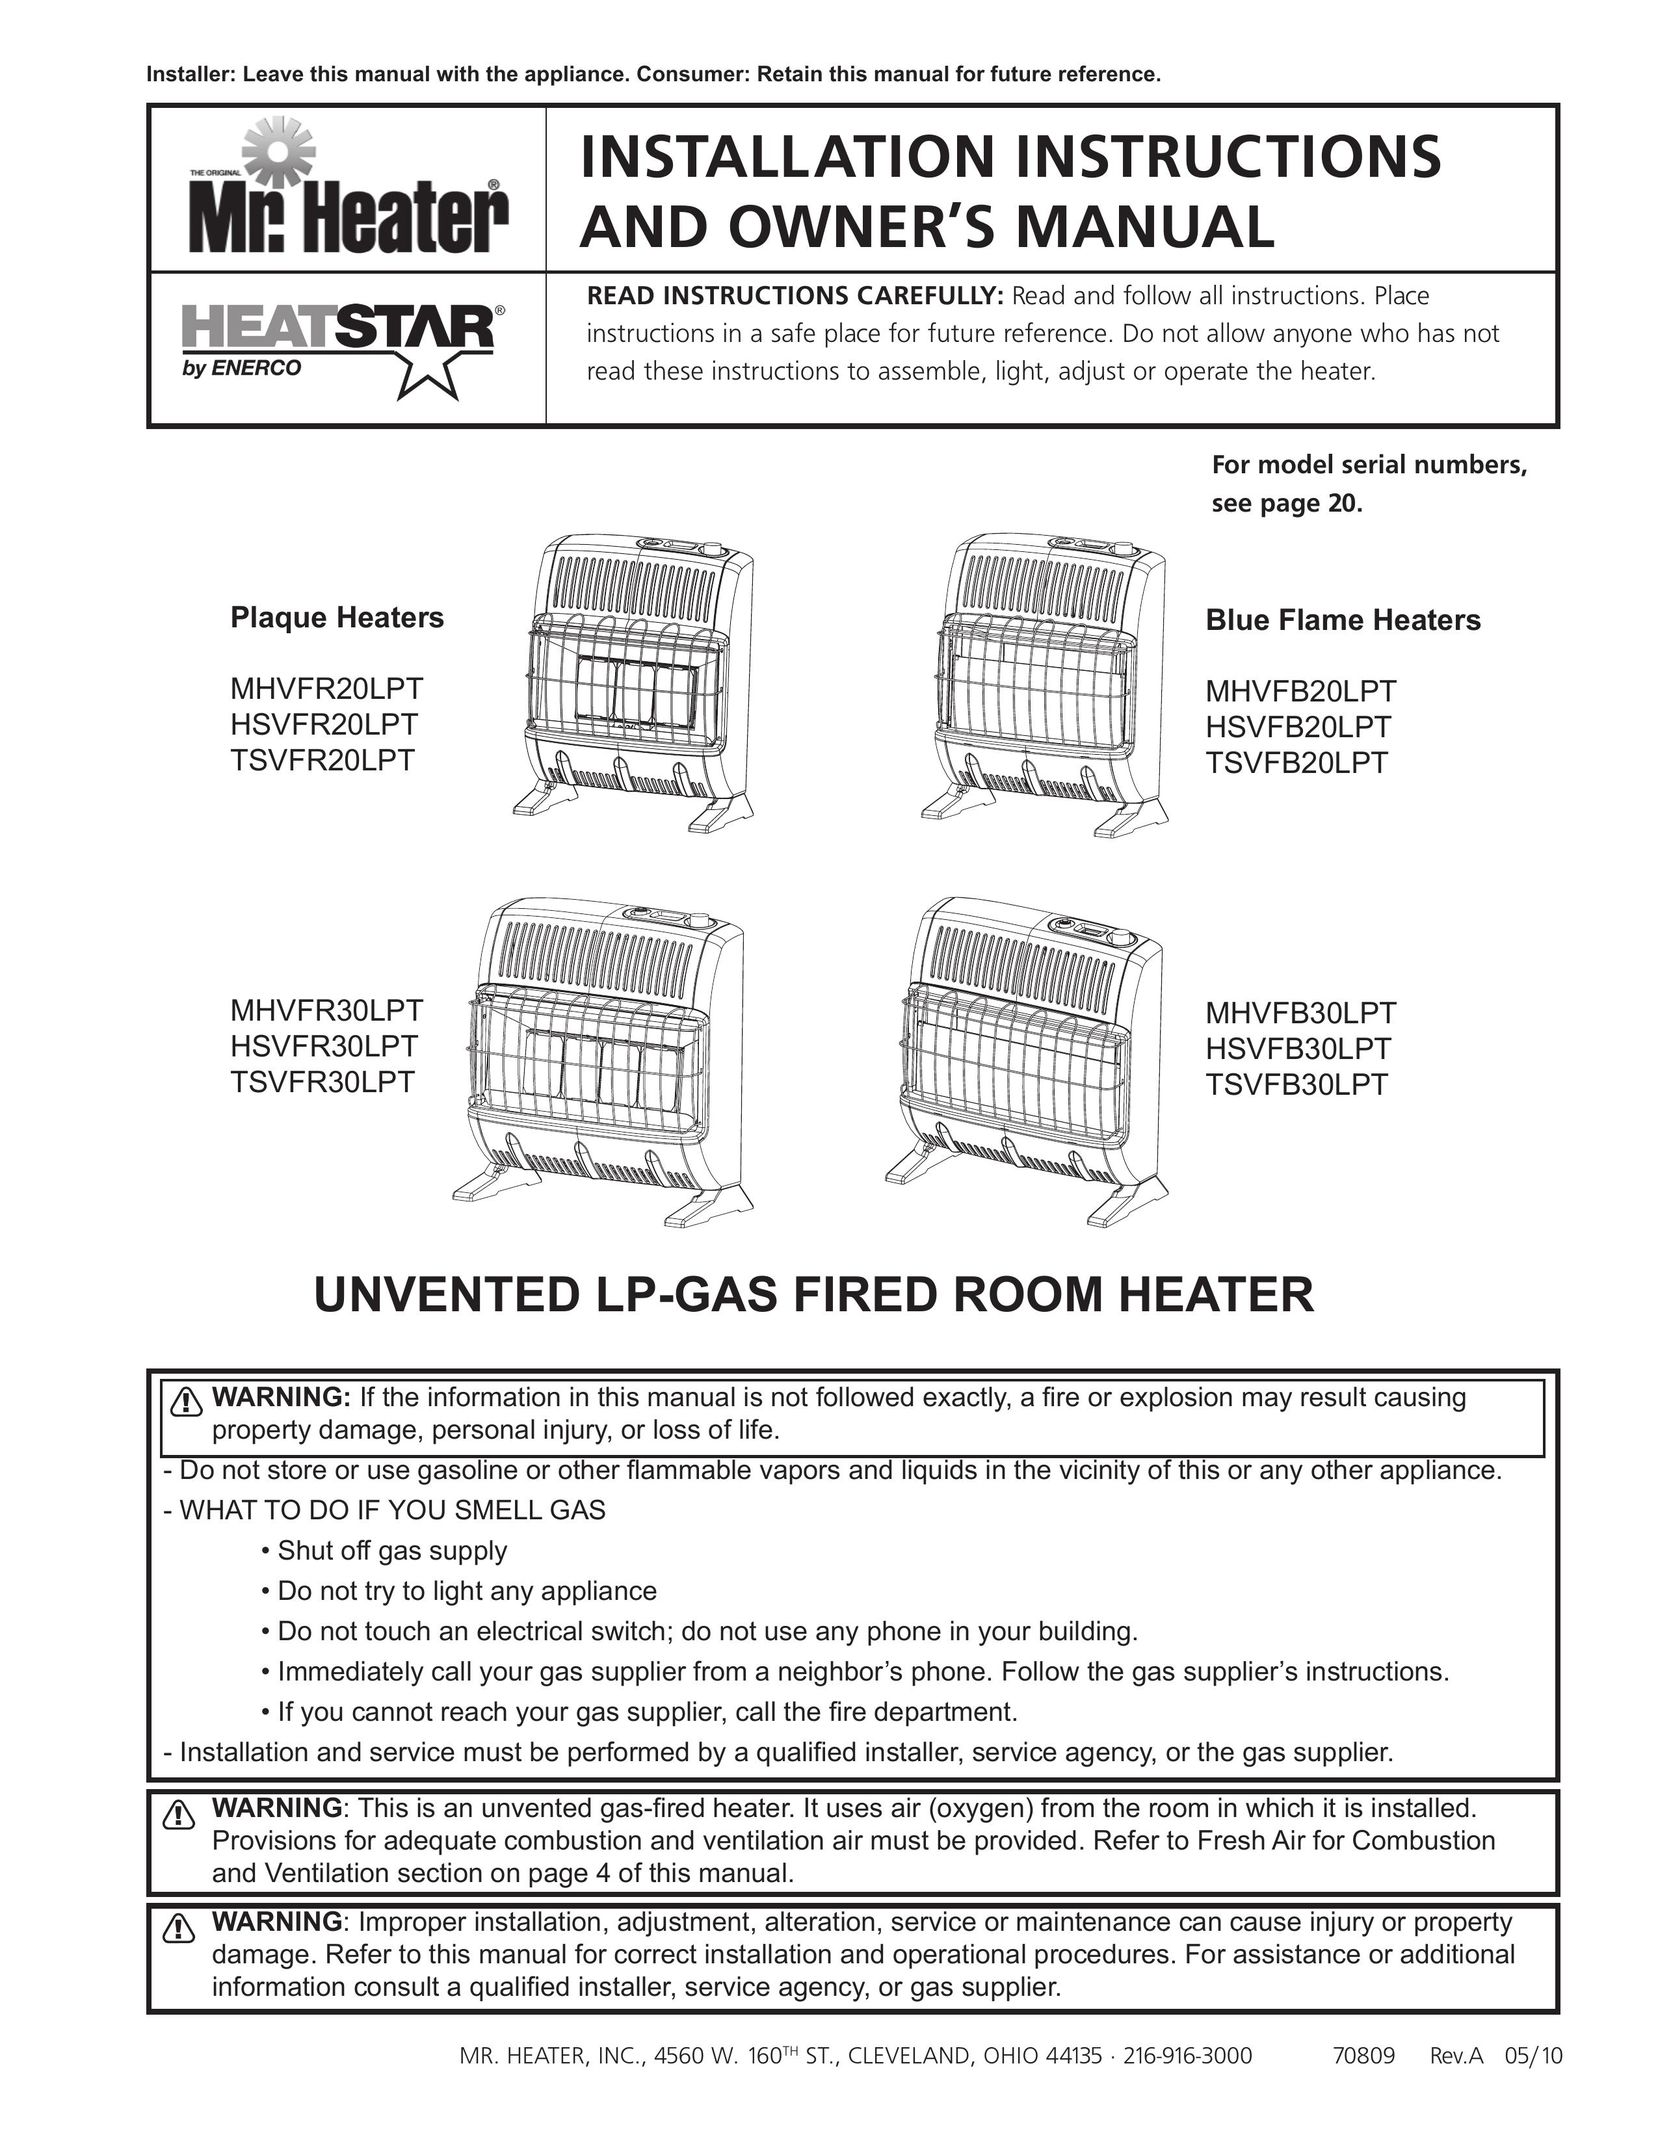 Enerco TSVFB30LPT Gas Heater User Manual